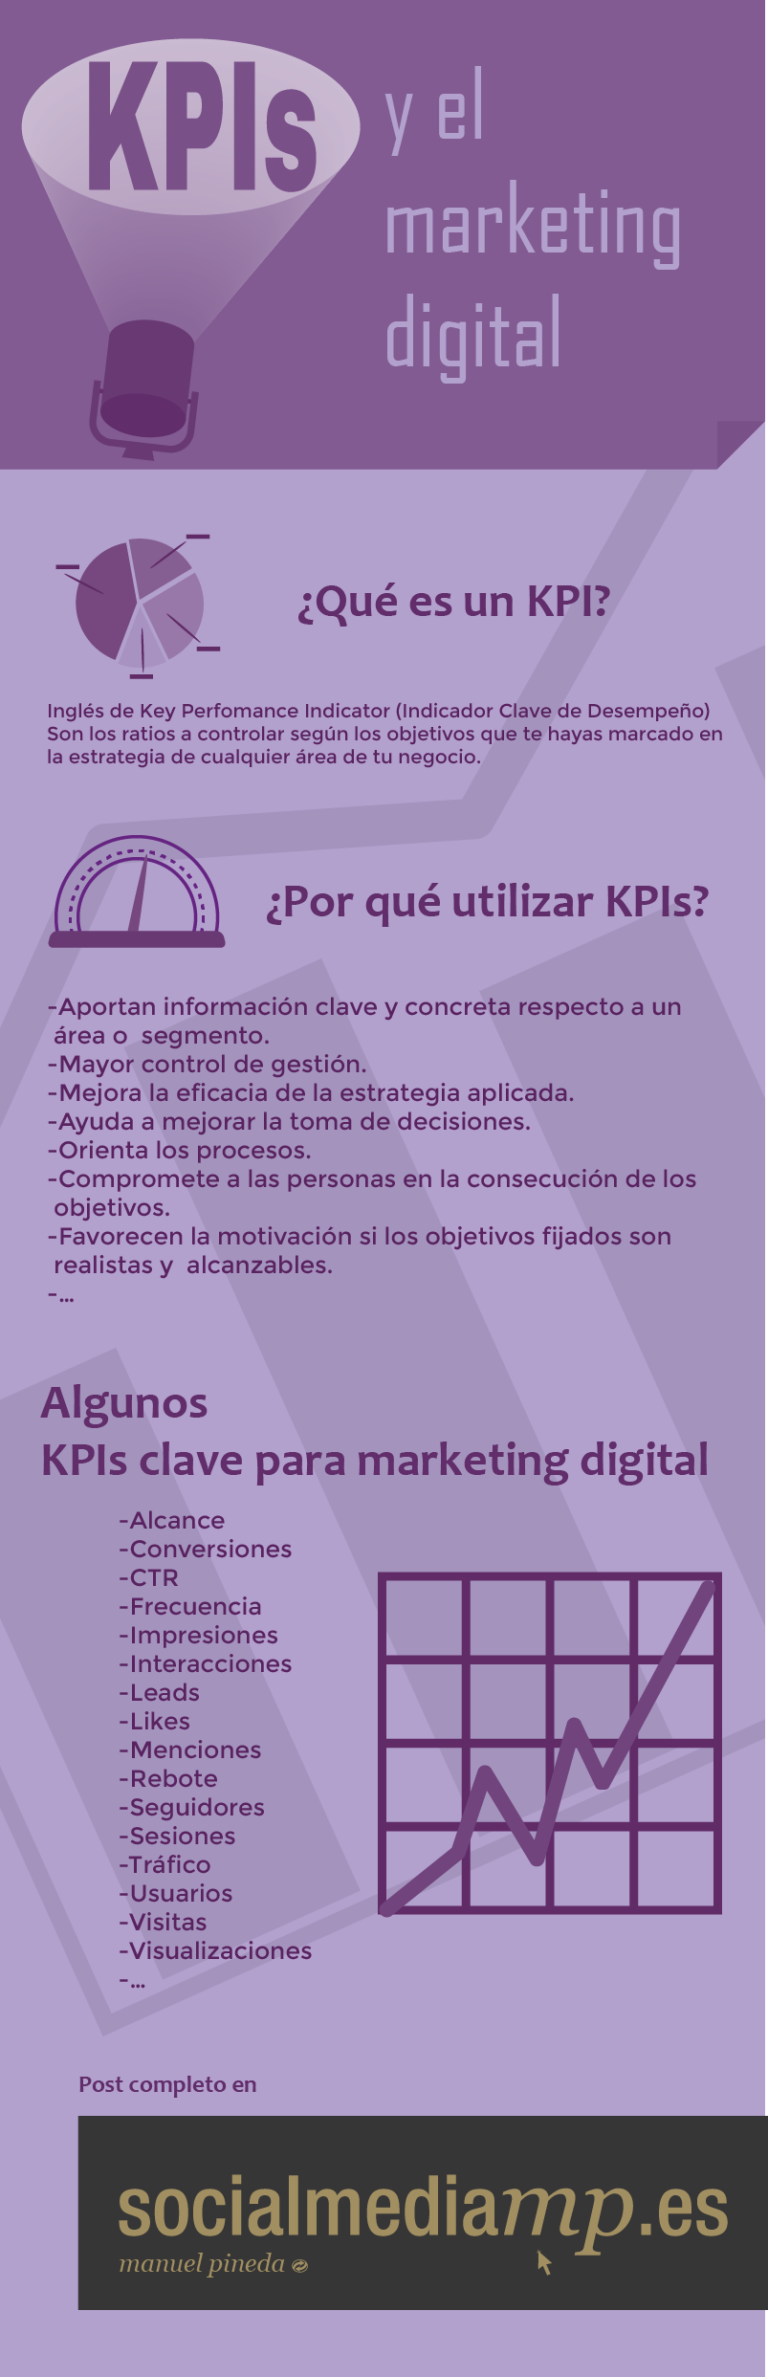 Infografia - KPIs y Marketing Digital #infografia #infographic #marketing - TICs y Formación